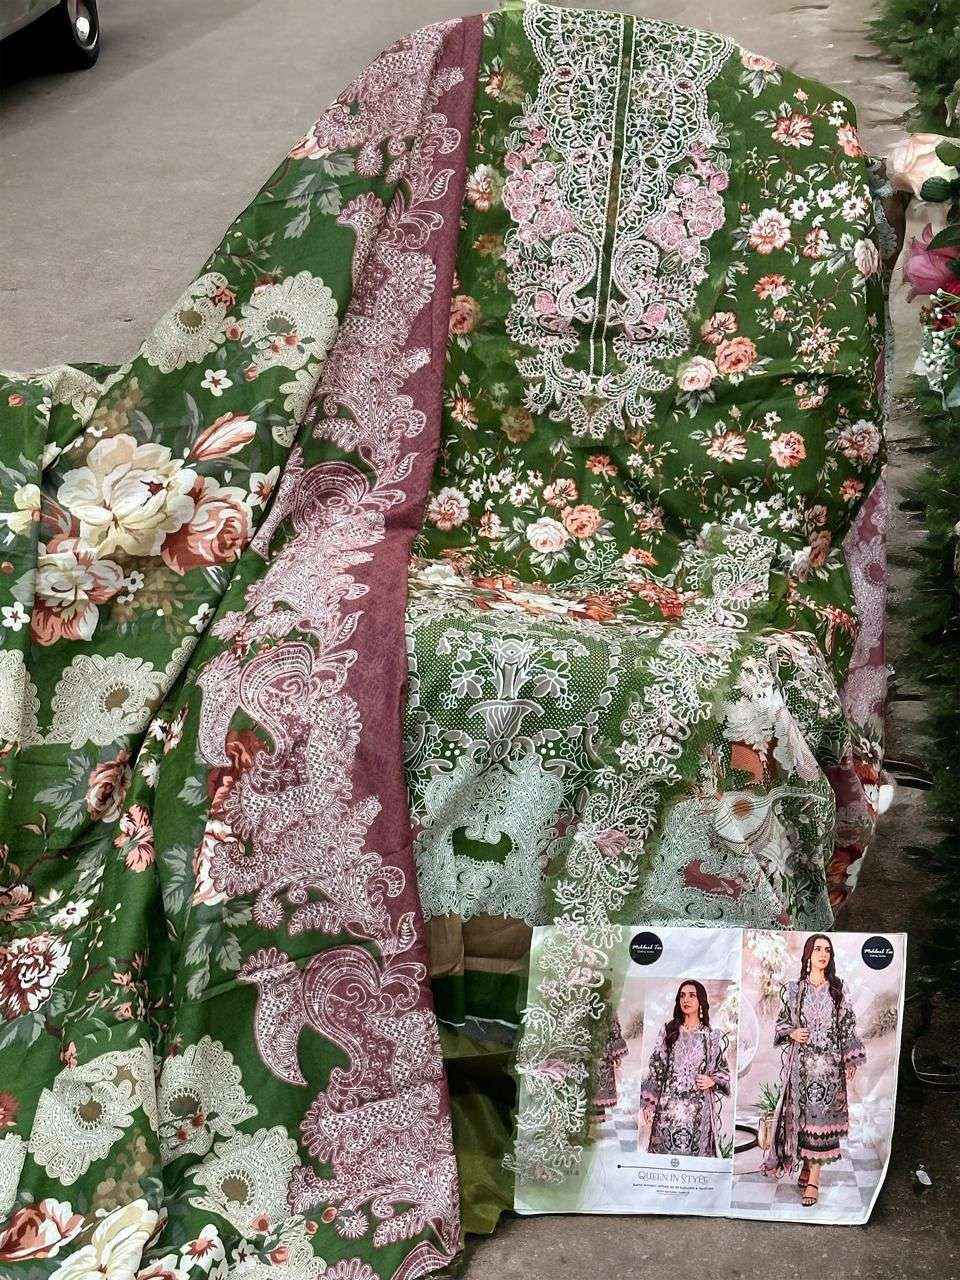 Mehboob Tex Needle Wonderful Cotton Dress Material 3 pcs Catalogue